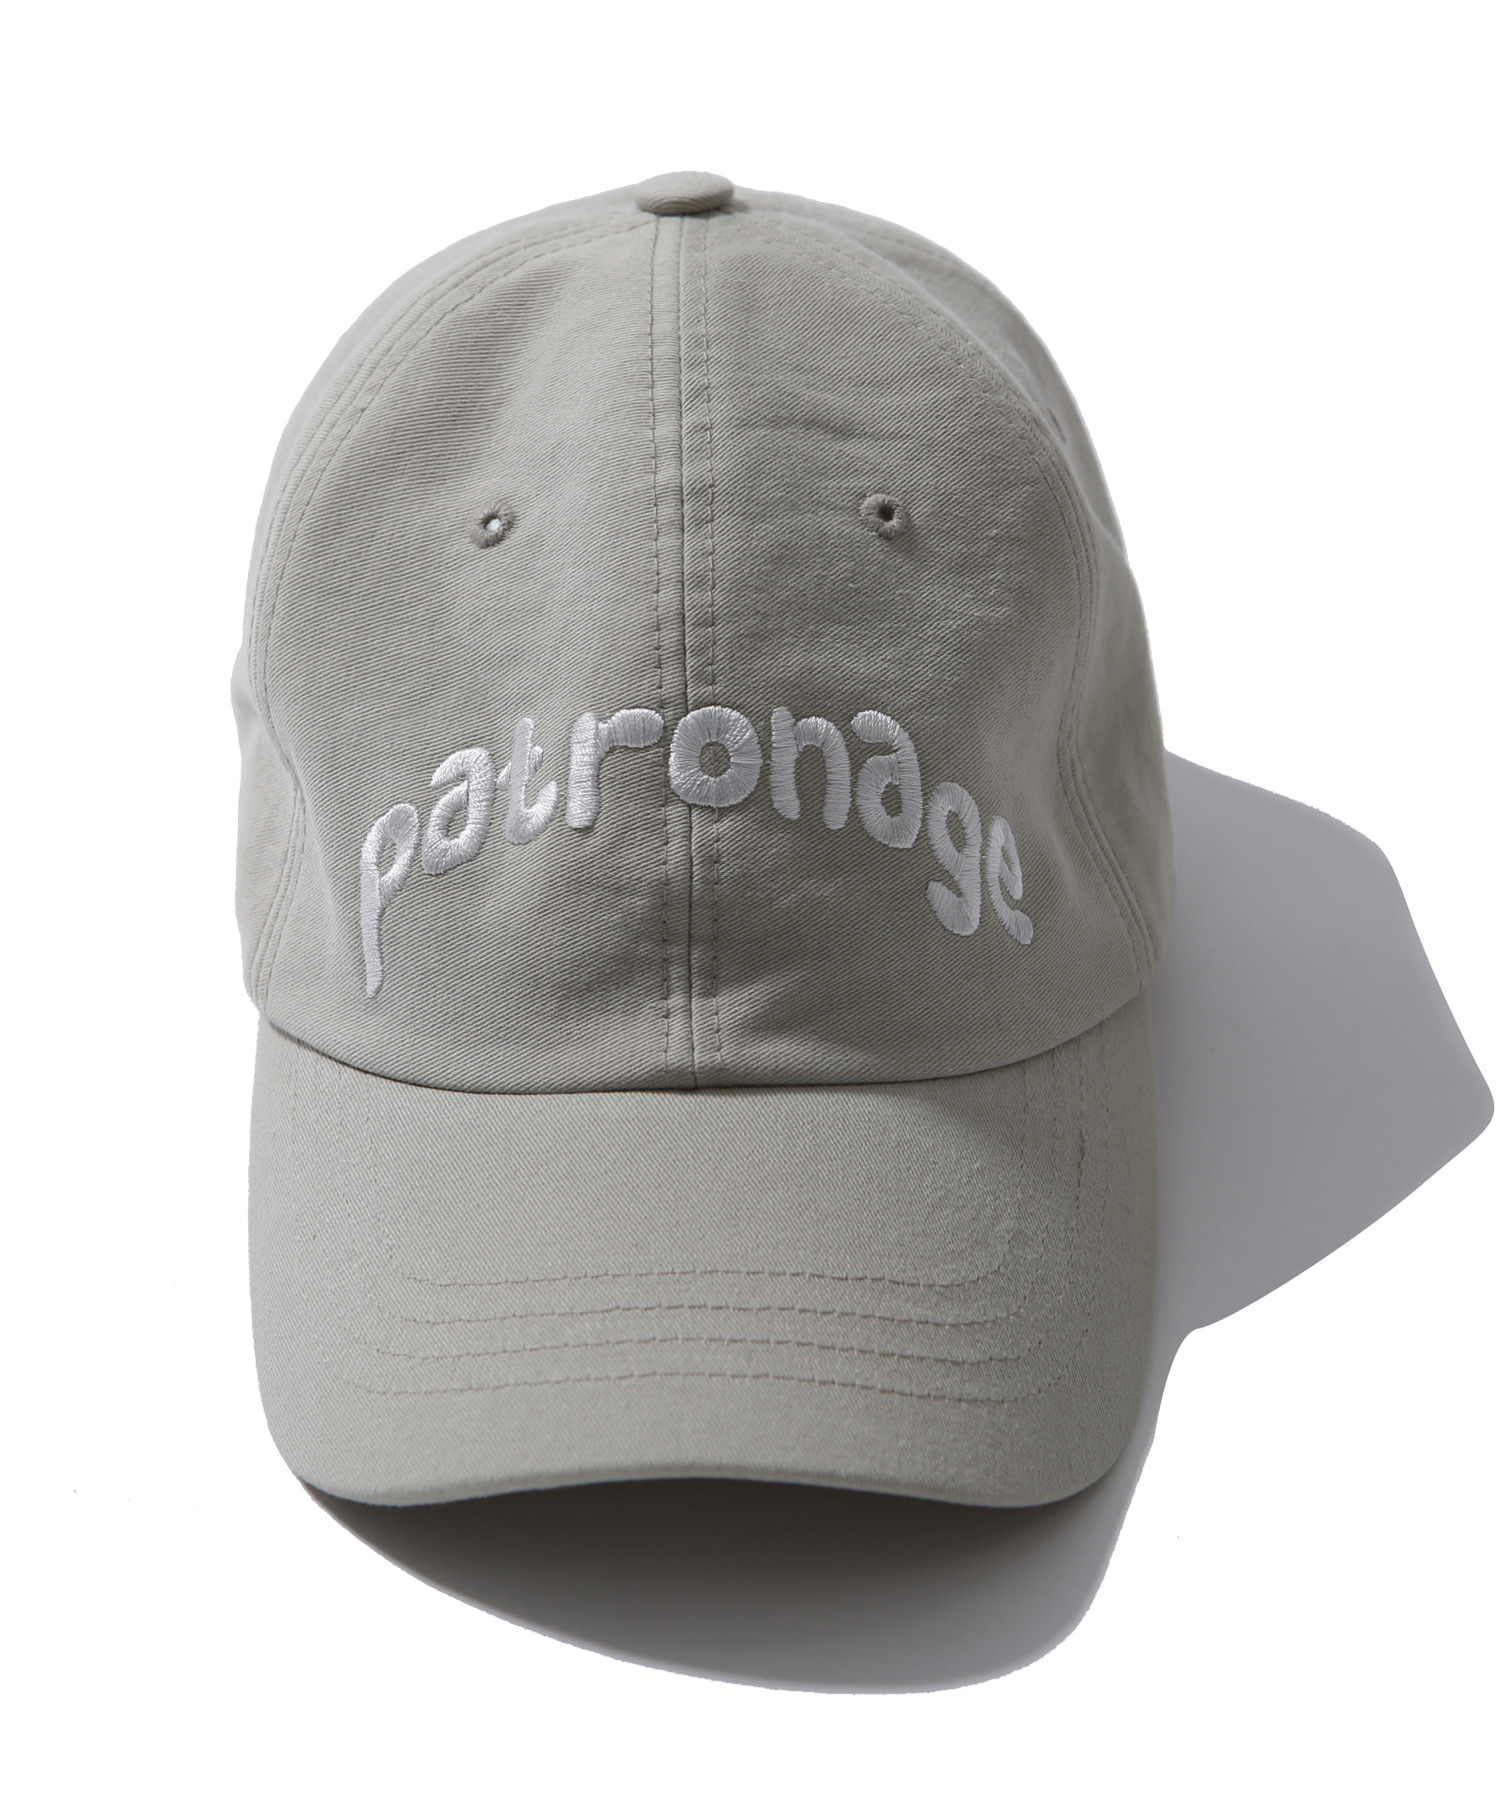 NOUN노운 patronage ball cap (beige)